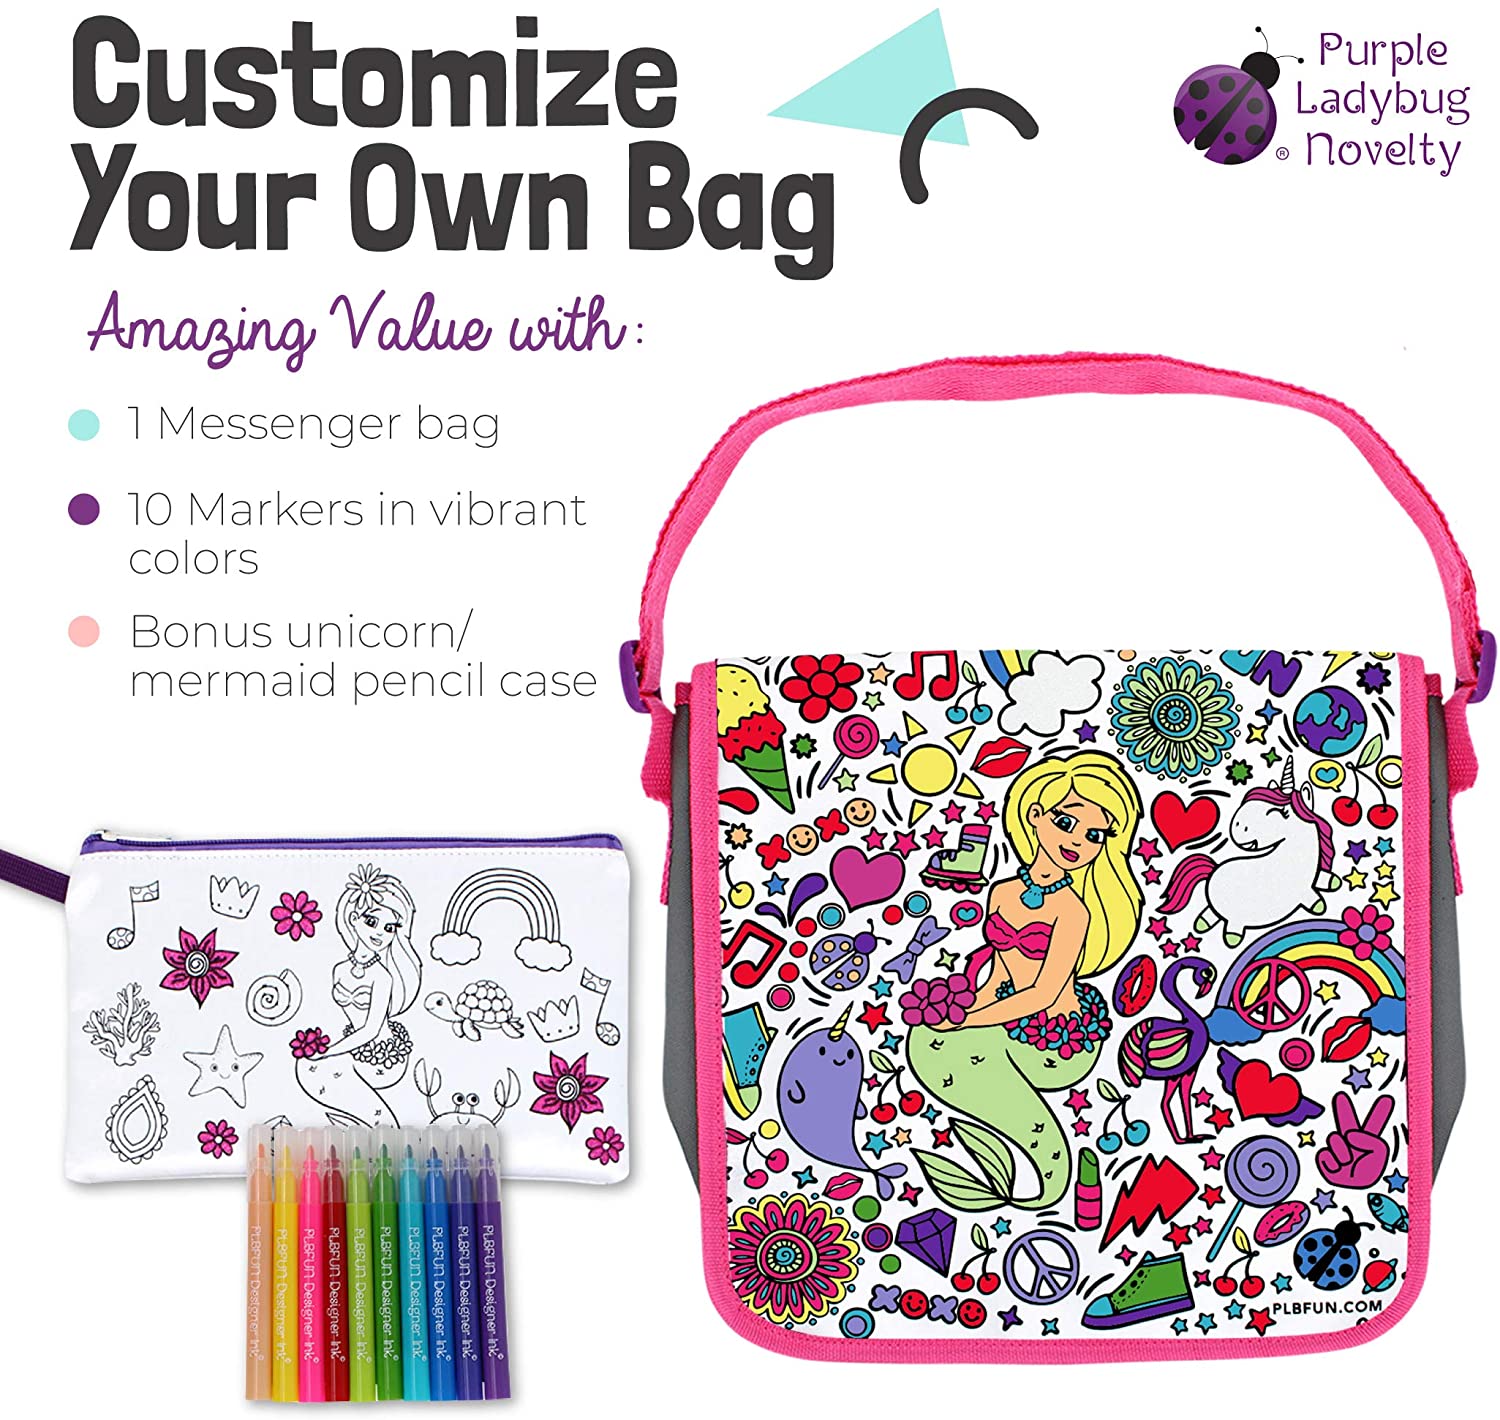 Purple Ladybug Jigsaw Puzzles Craft Kit for Girls with Unicorn & Mermaid Designs